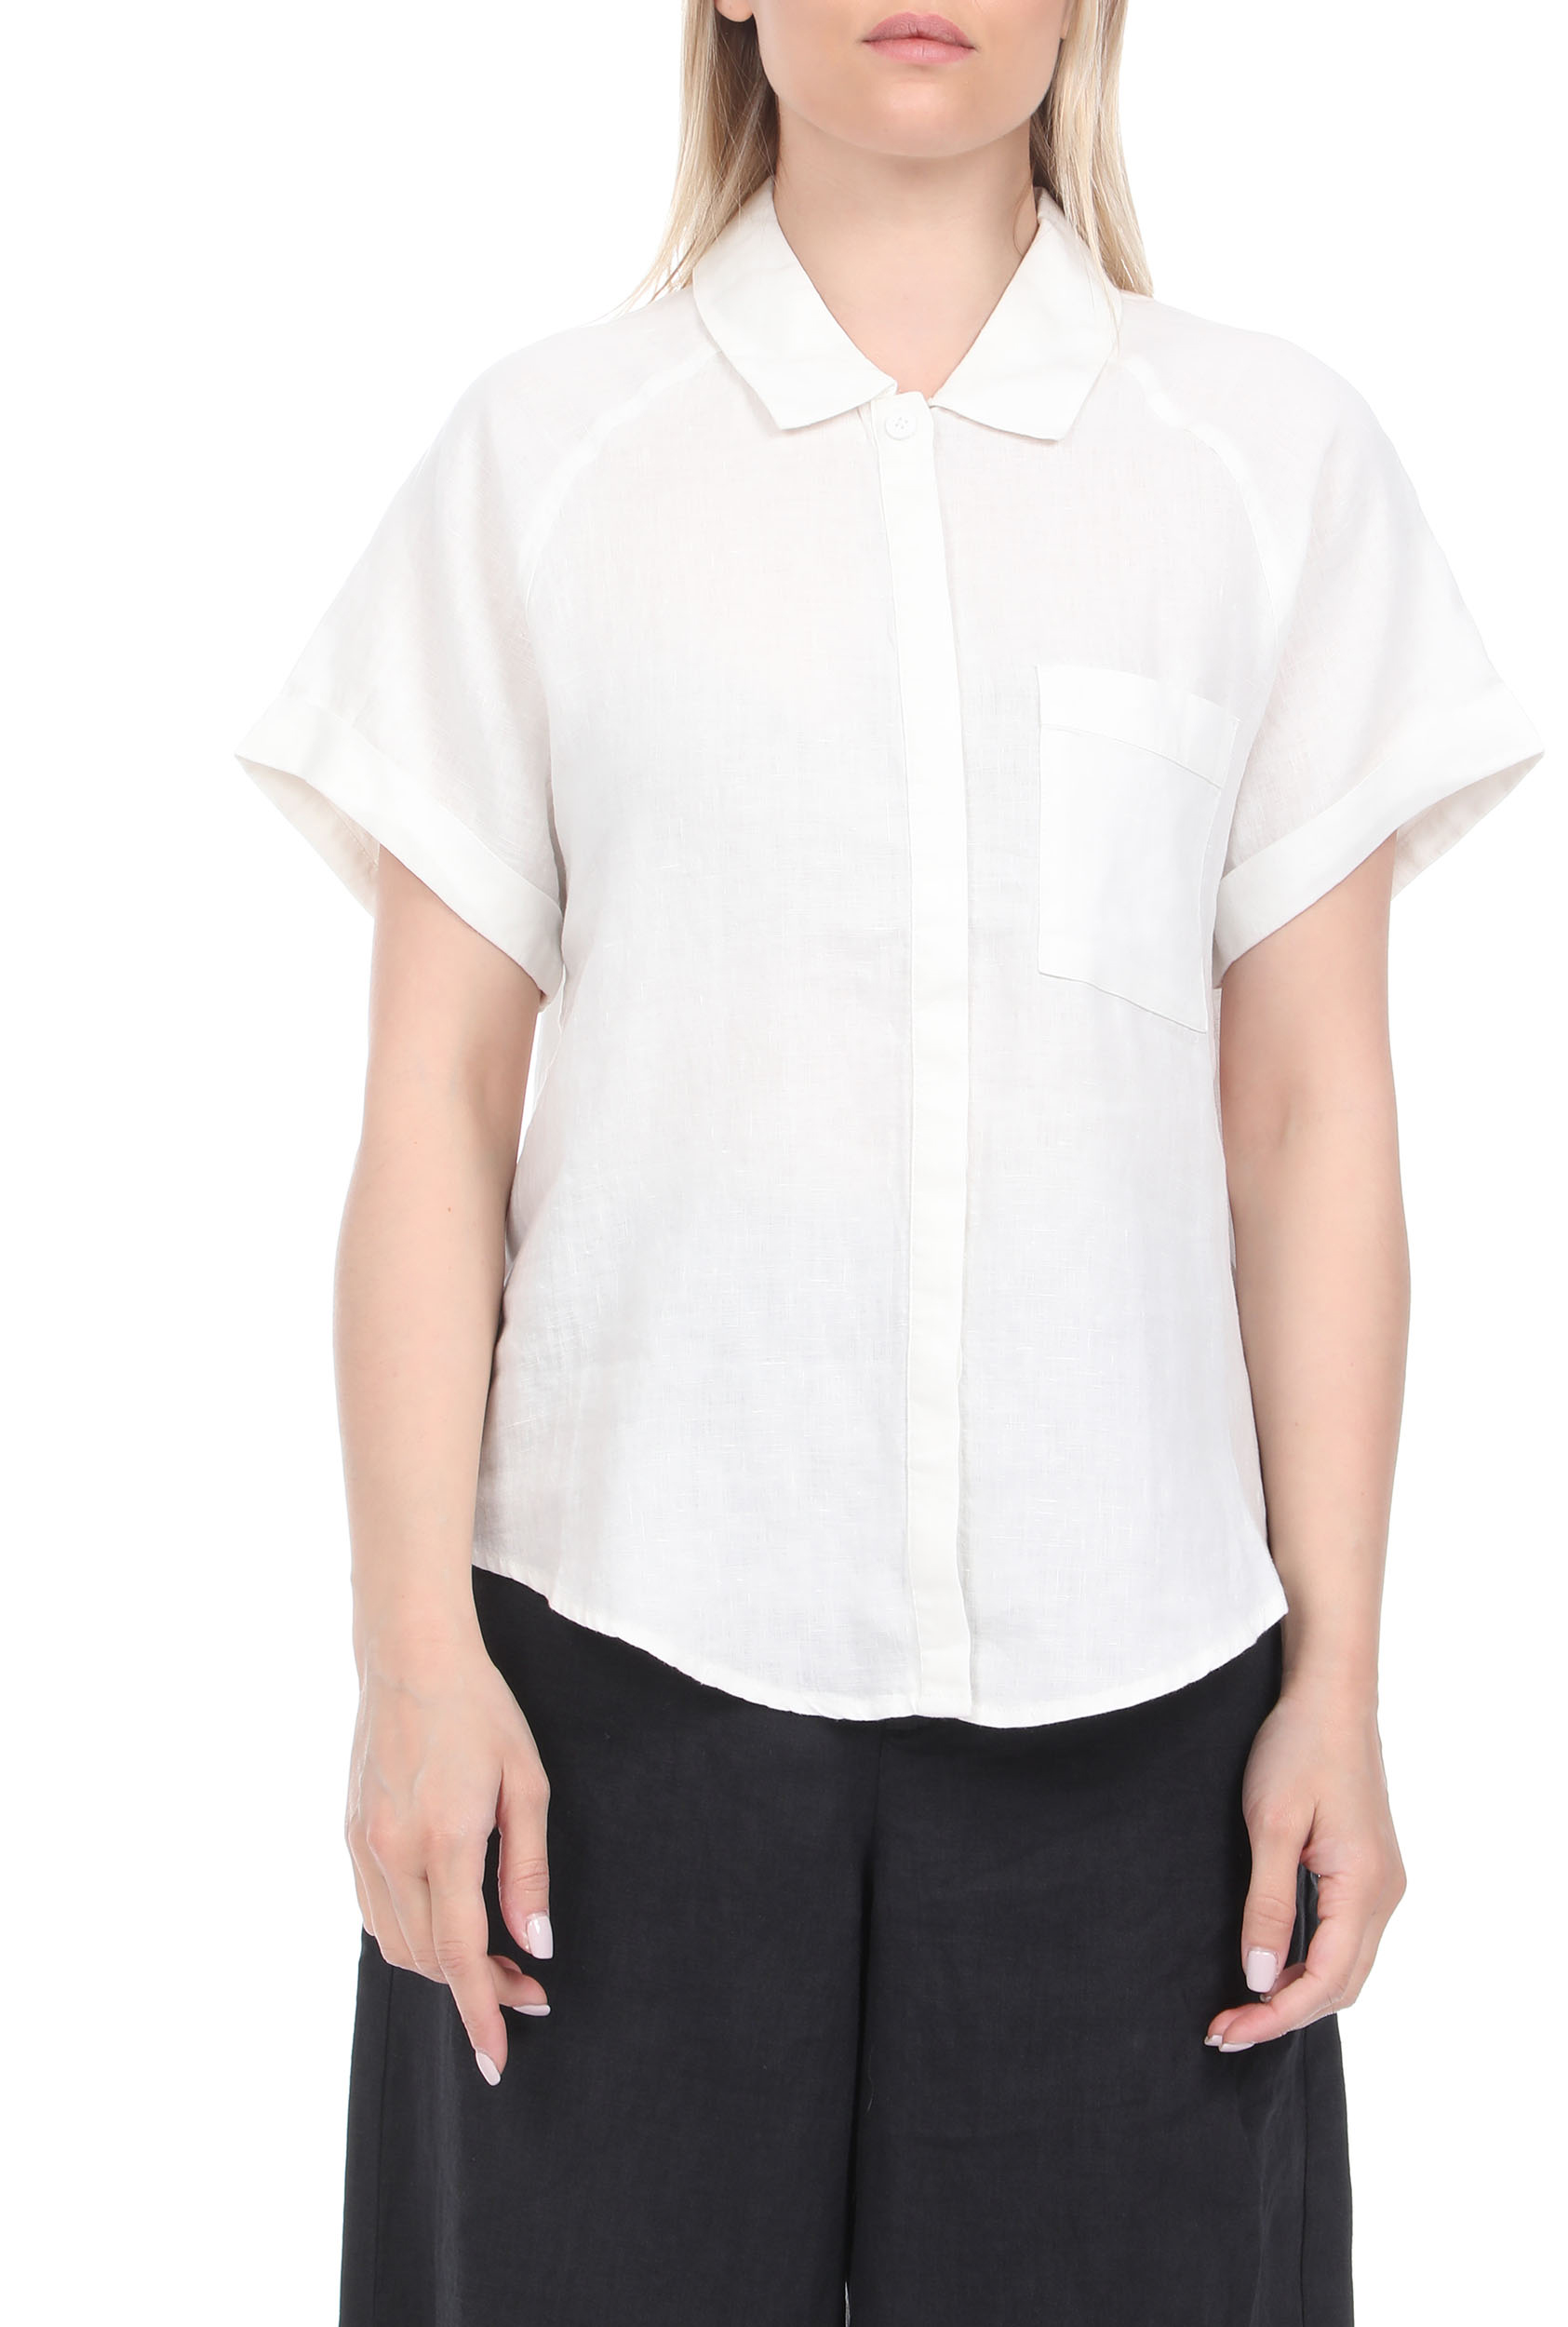 ECOALF – Γυναικειο λινο πουκαμισο ECOALF LYCHEE λευκο